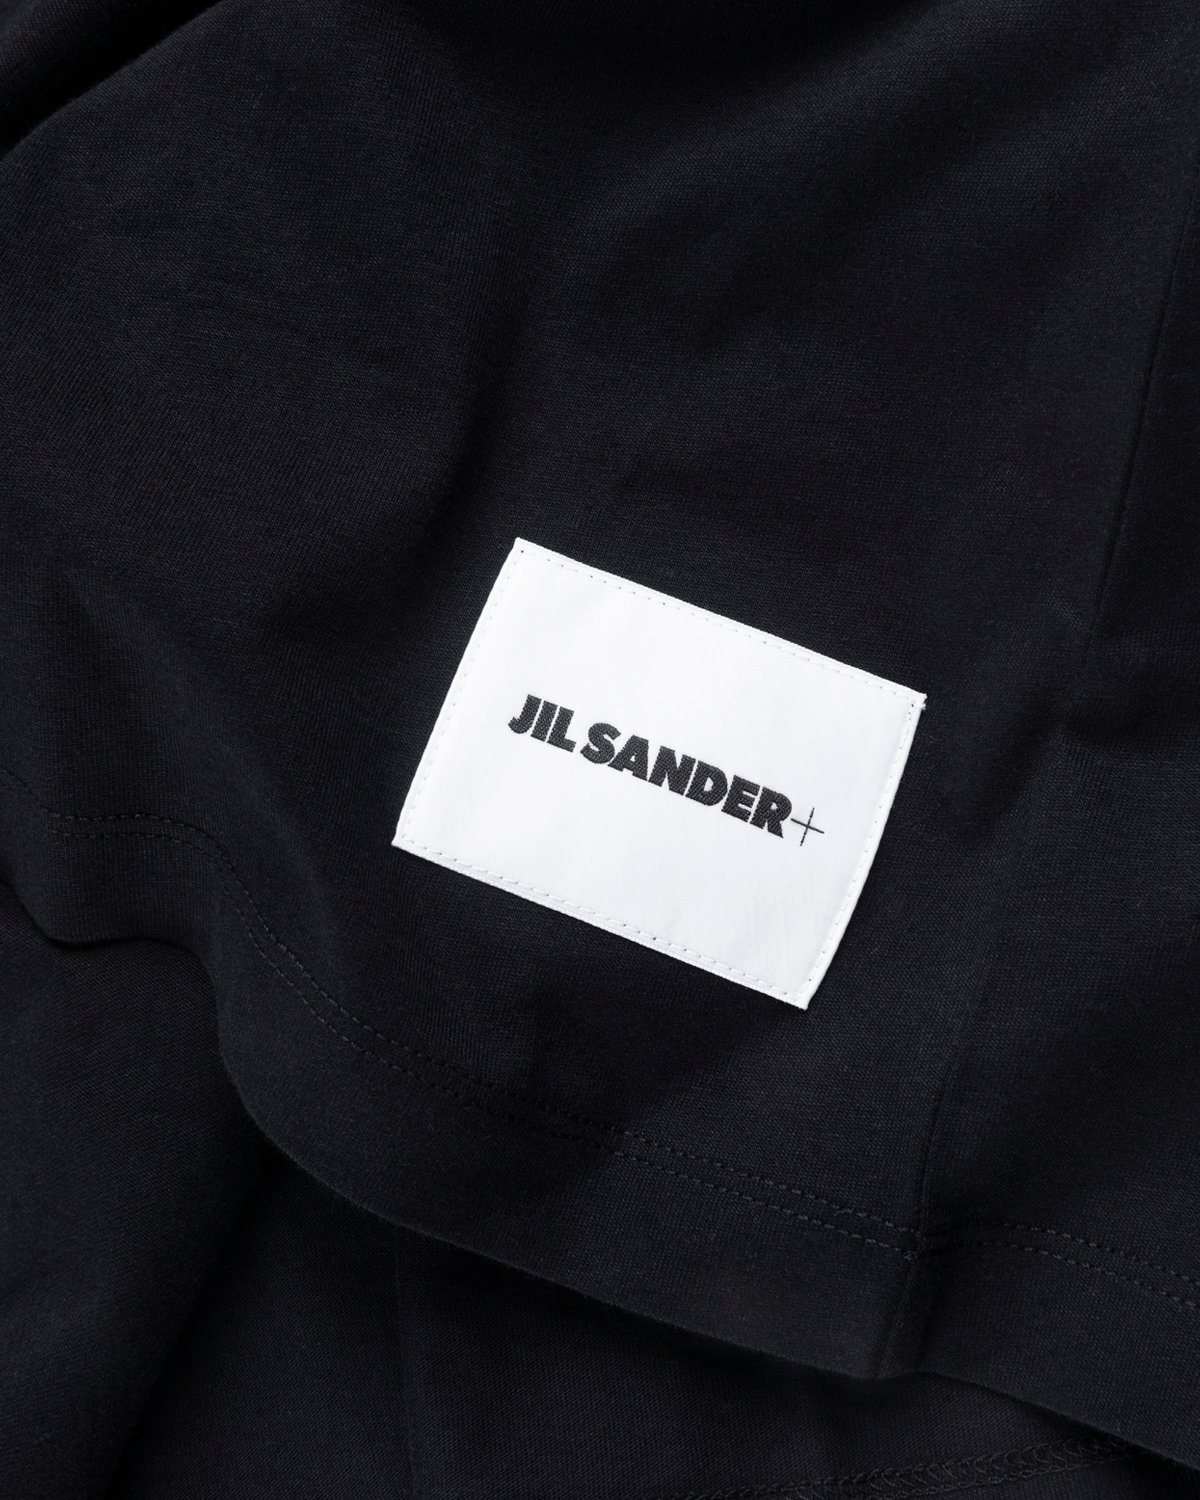 Jil Sander - T-Shirt 3-Pack Black - Clothing - Black - Image 6